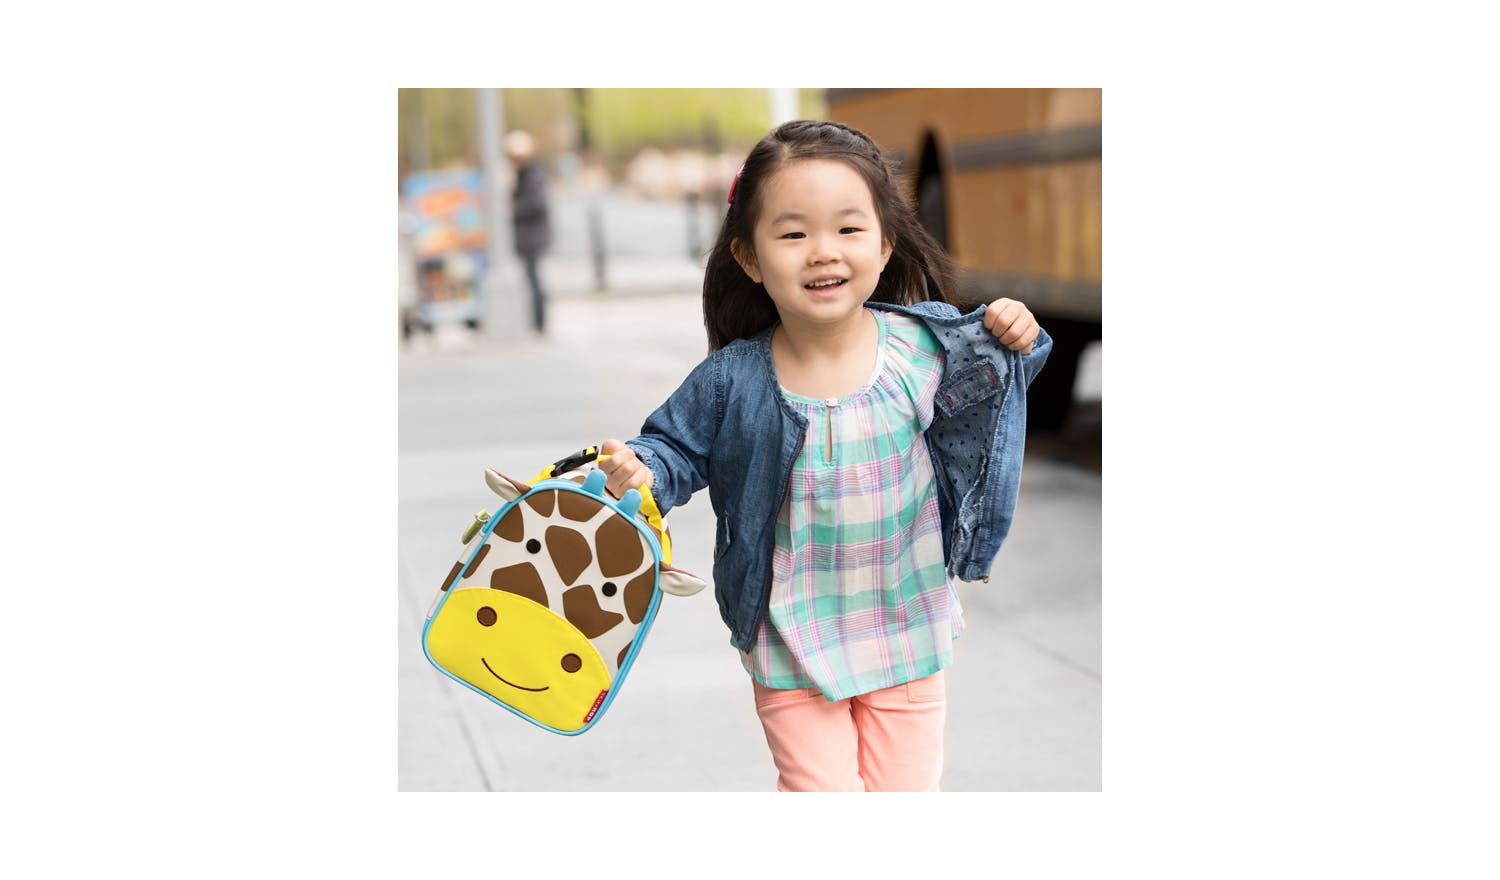 Skip Hop Zoo Lunchie Insulated Kids Lunch Bag - Giraffe